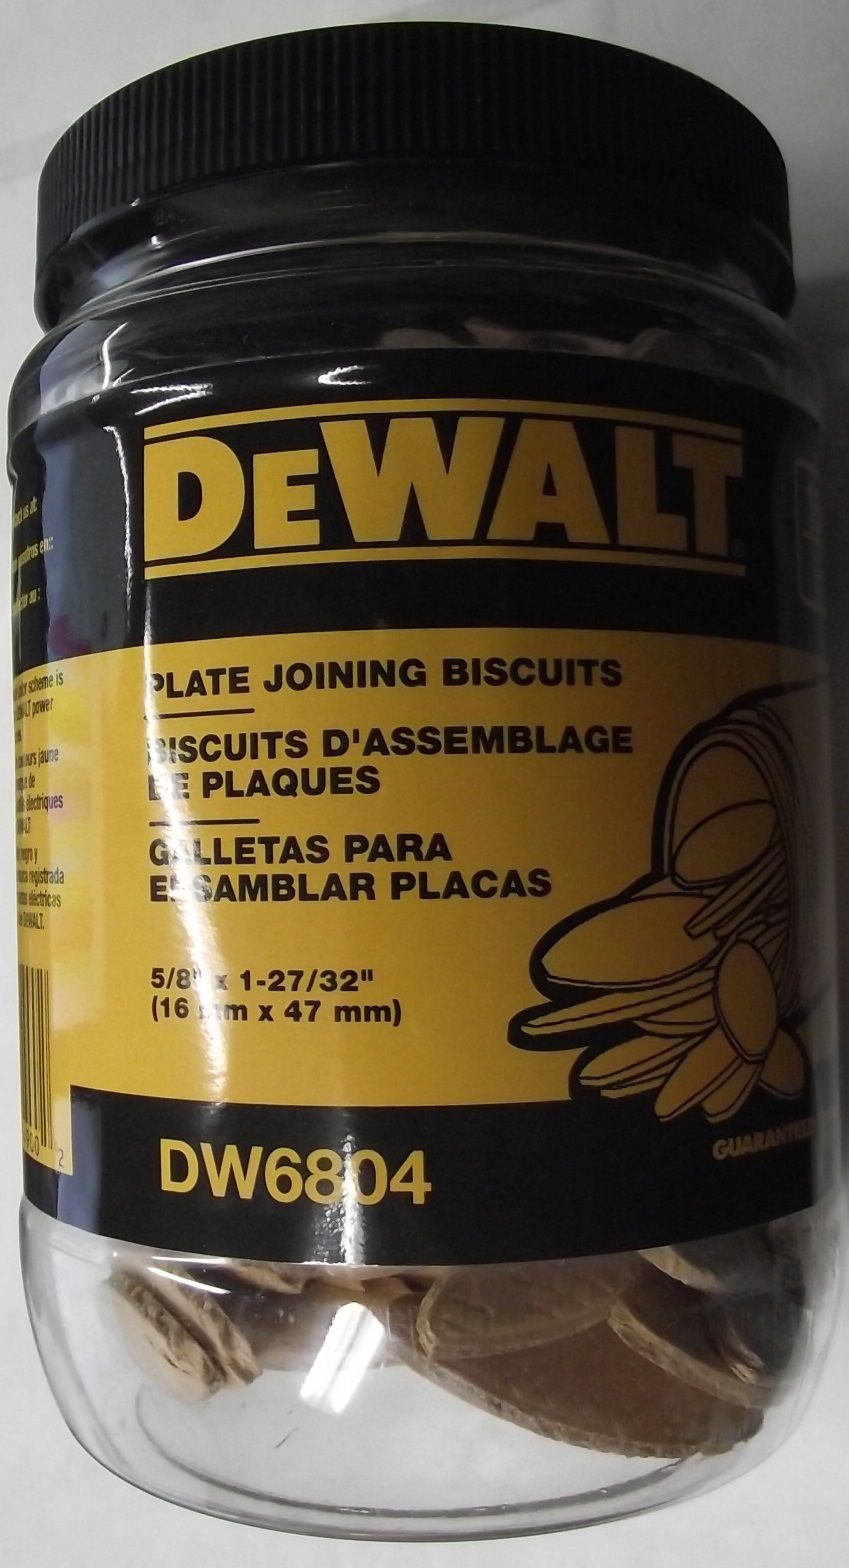 Dewalt DW6804 Plate Joiner Biscuits Size 0 150 Pack USA